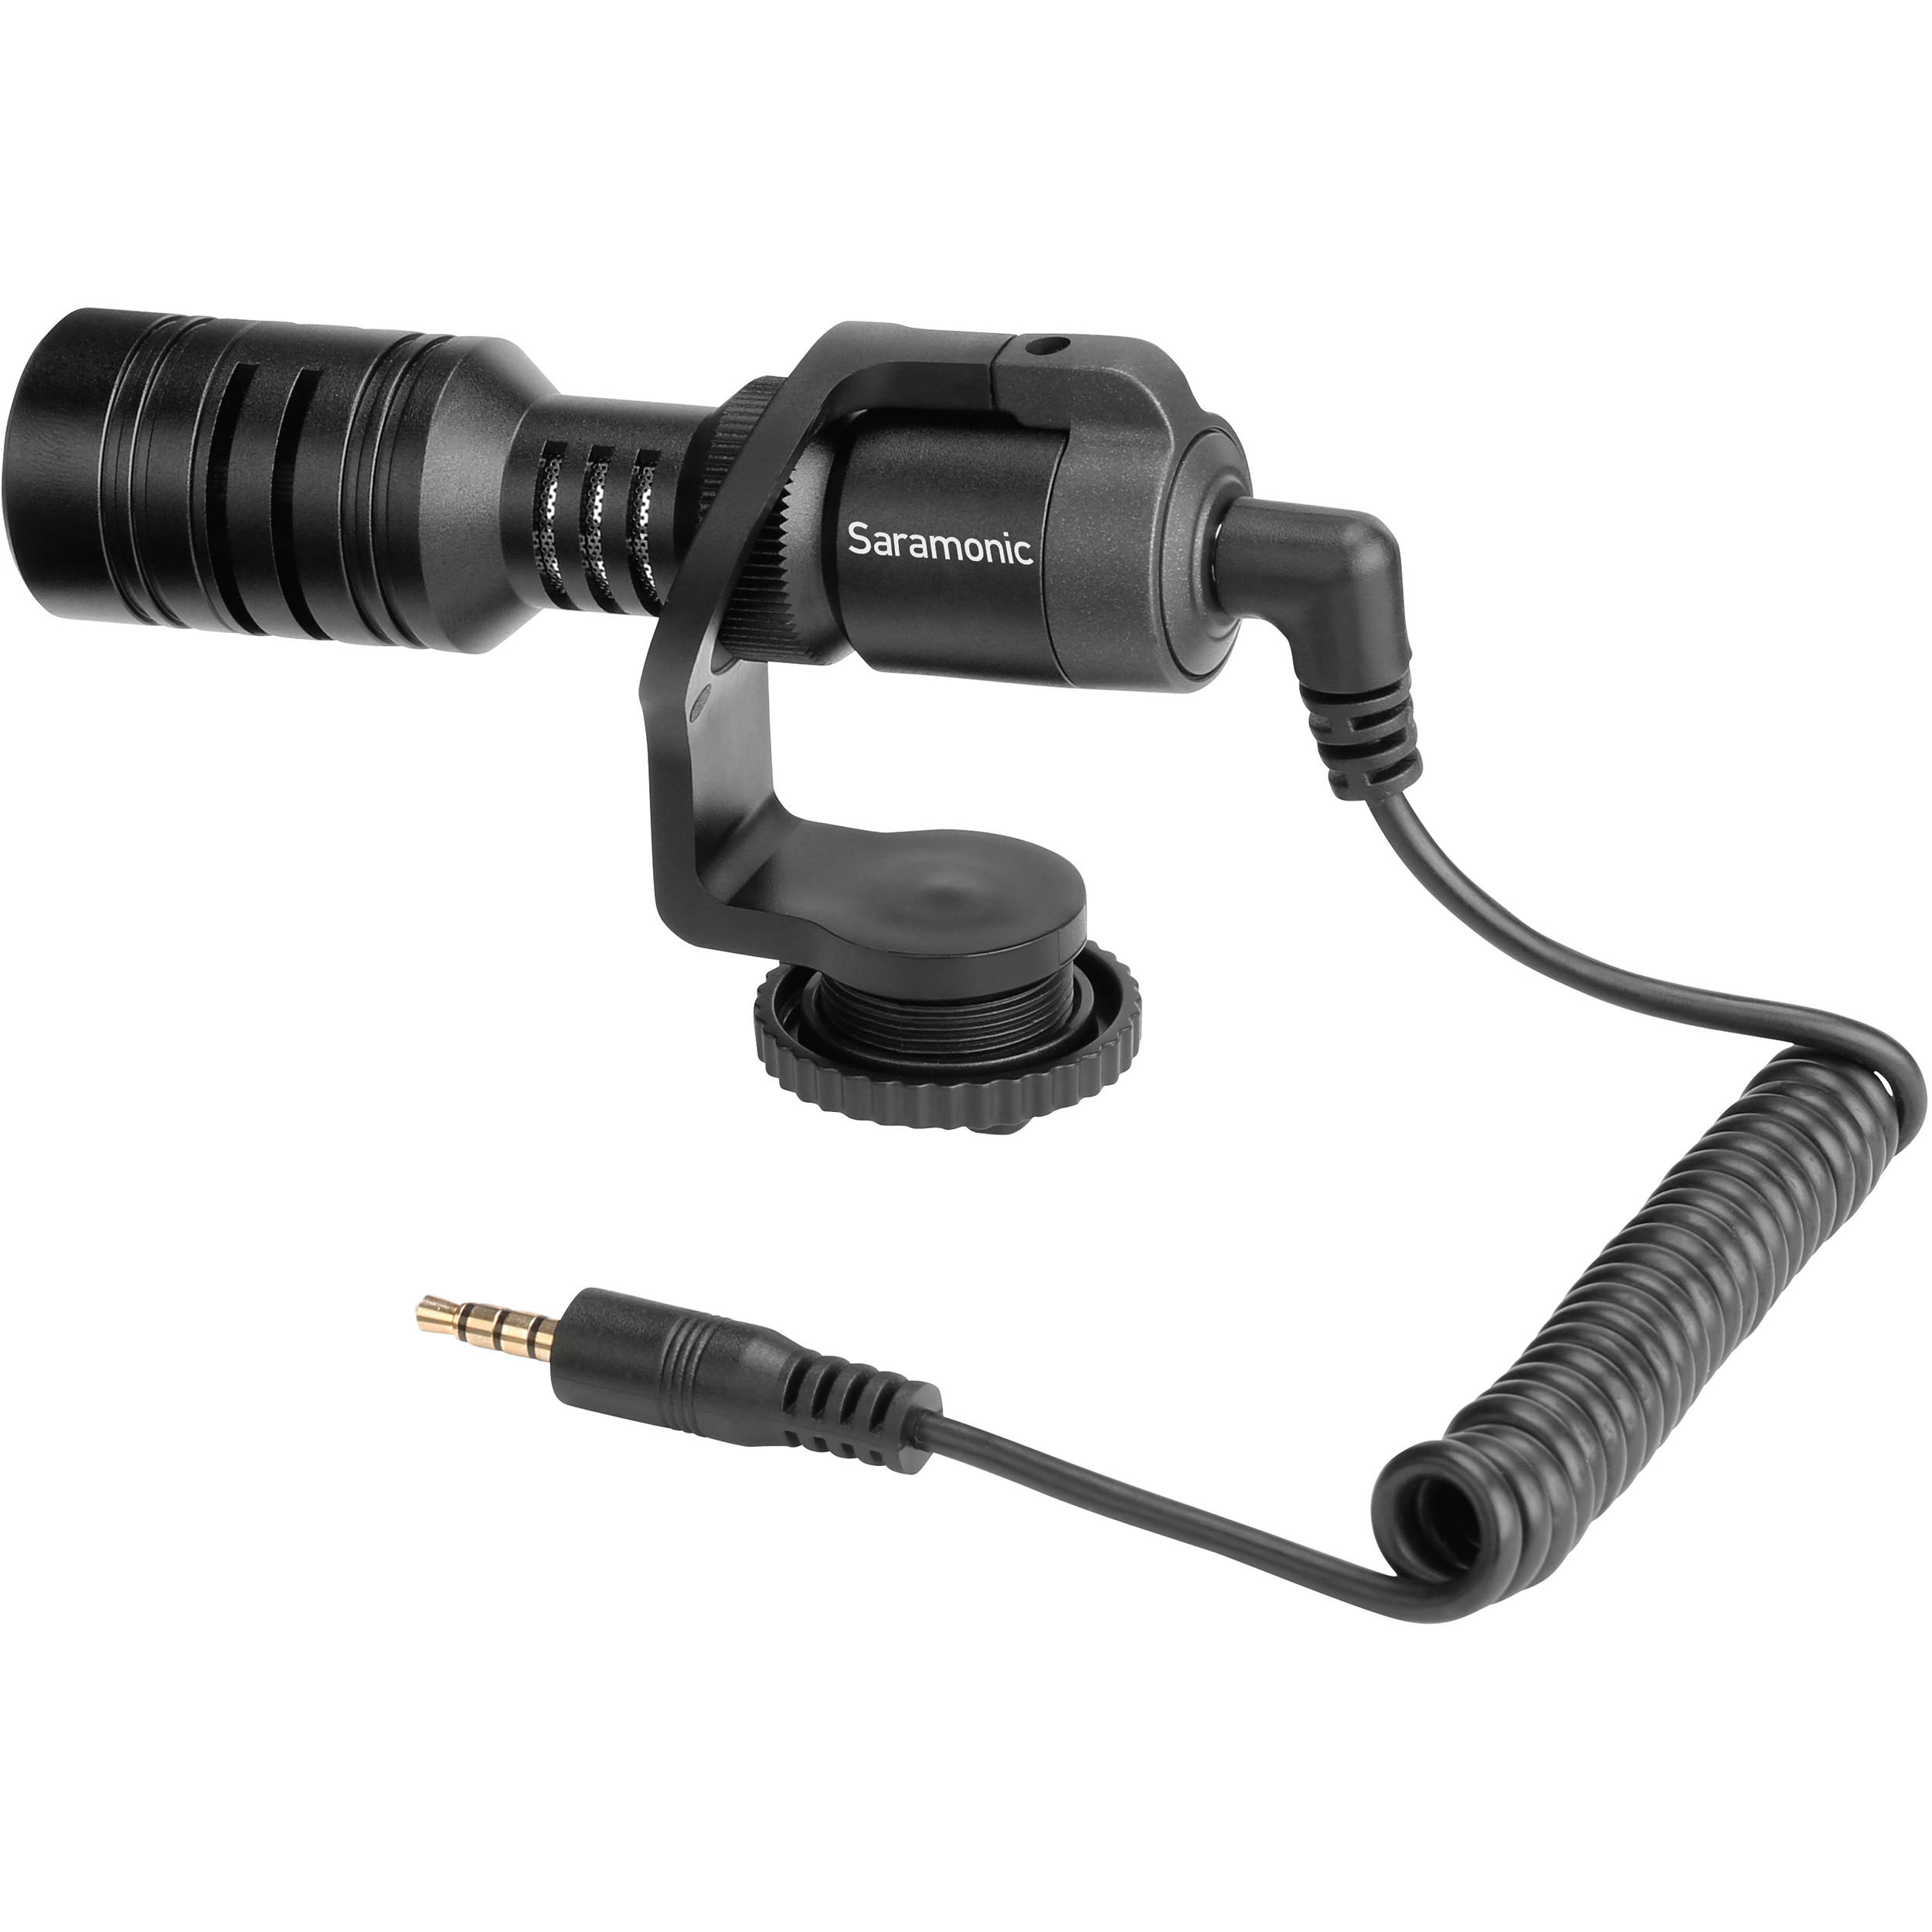 Saramonic Vmic Mini Compact Camera-Mount for DSLR Cameras and Smartphones